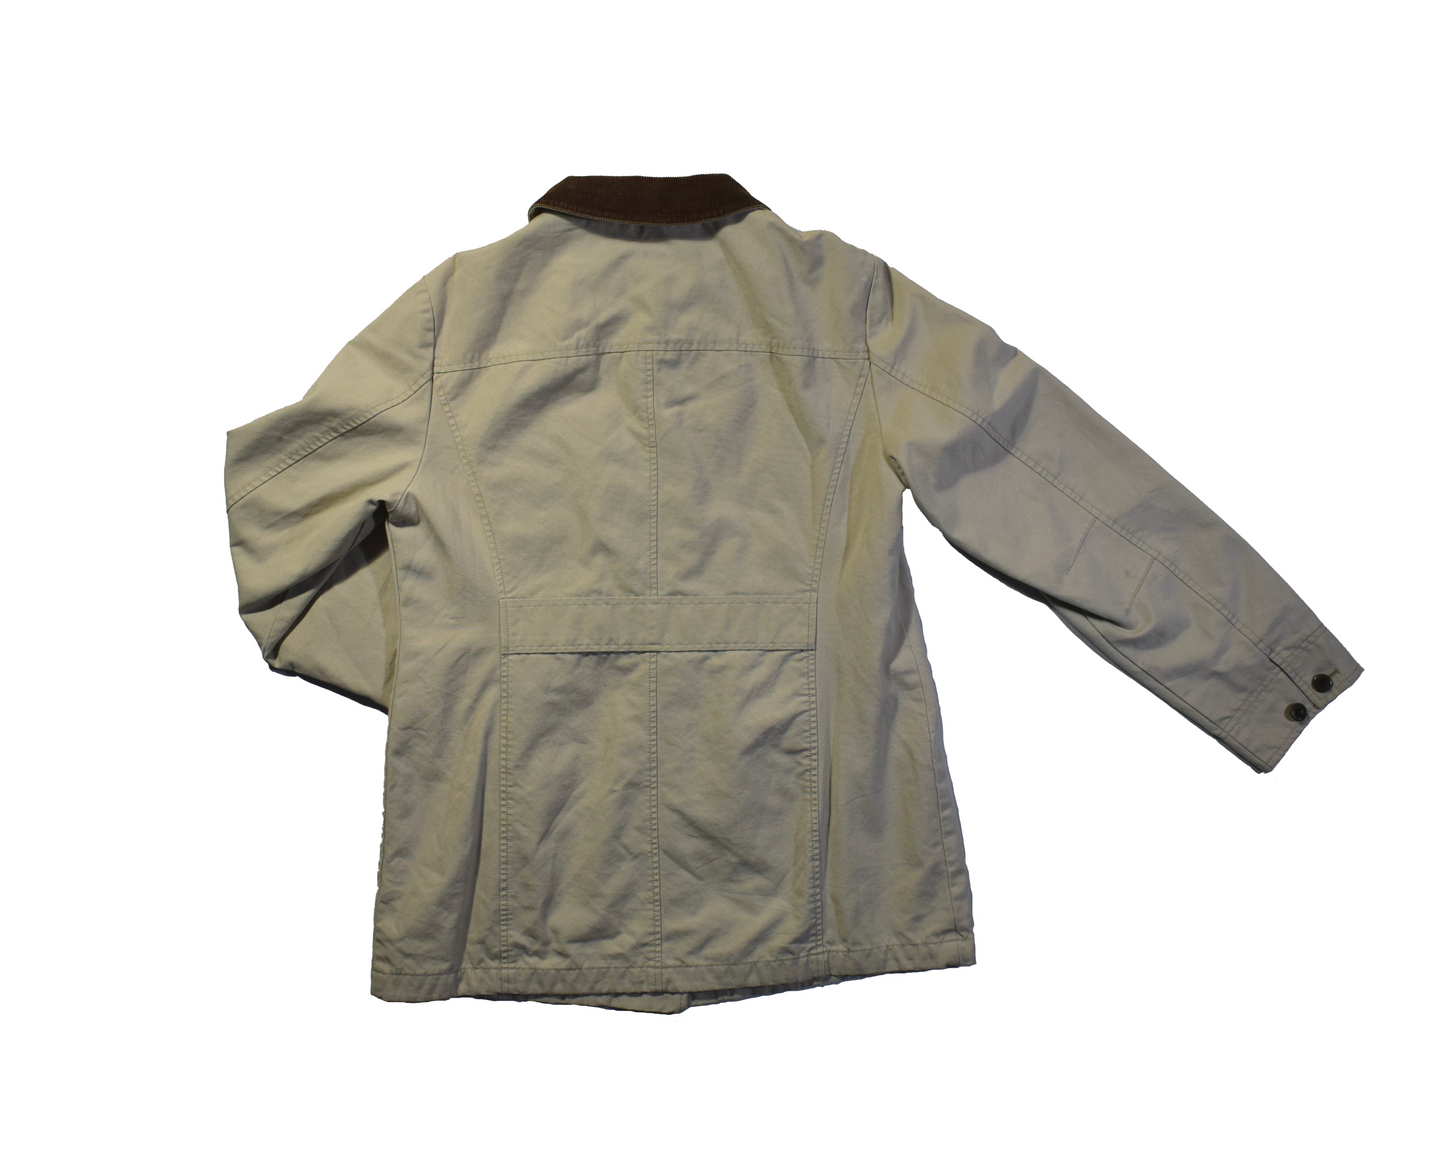 Vintage LLBean Beige Patterned Jacket